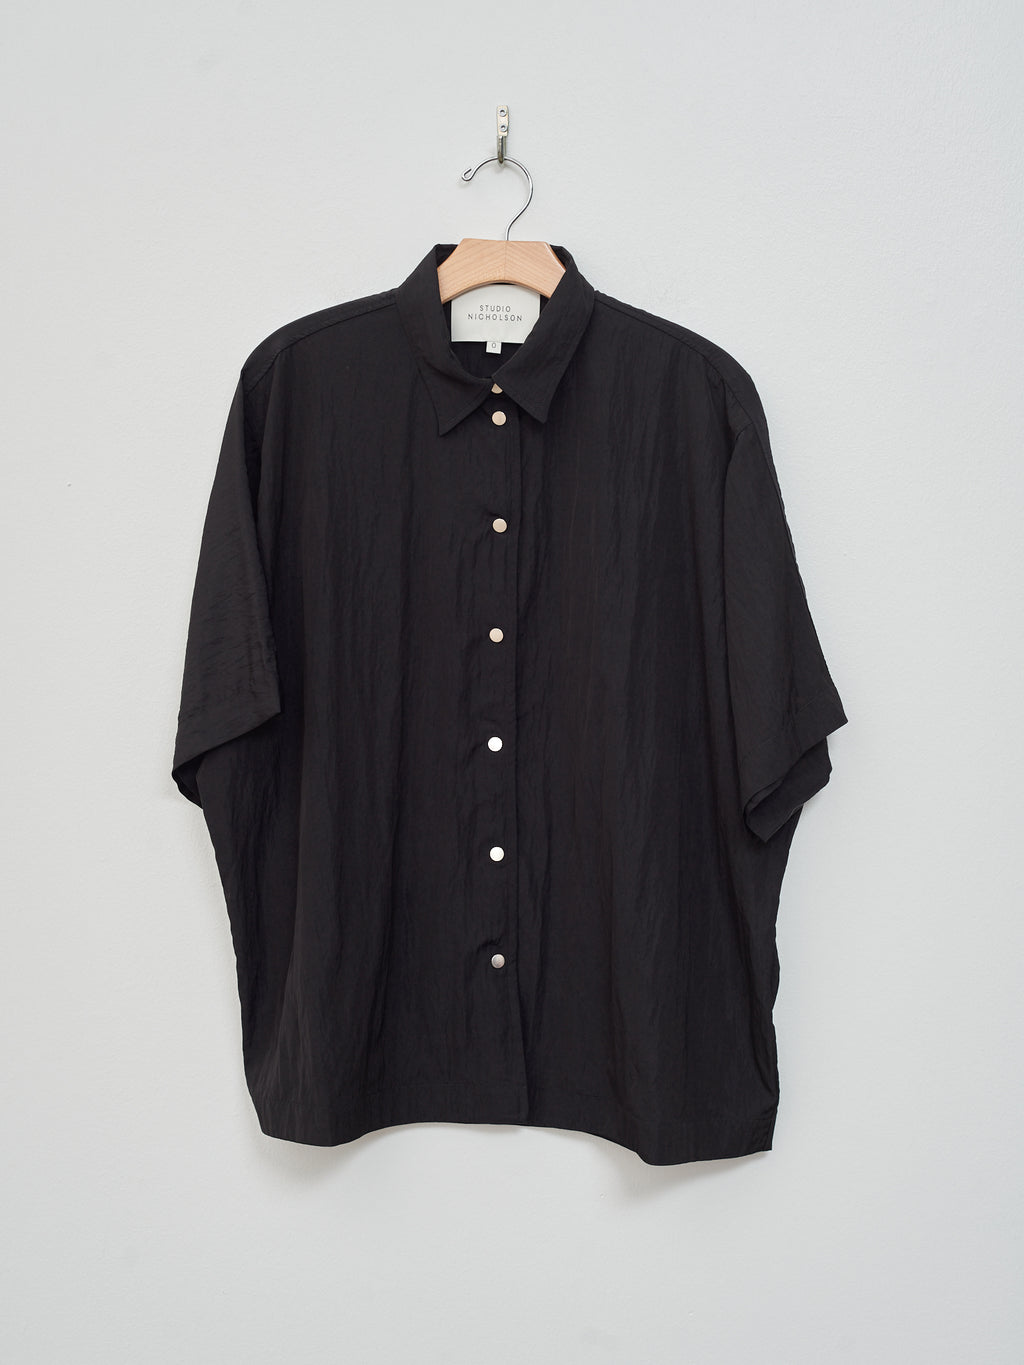 Namu Shop - Studio Nicholson Kanno Shirt - Black